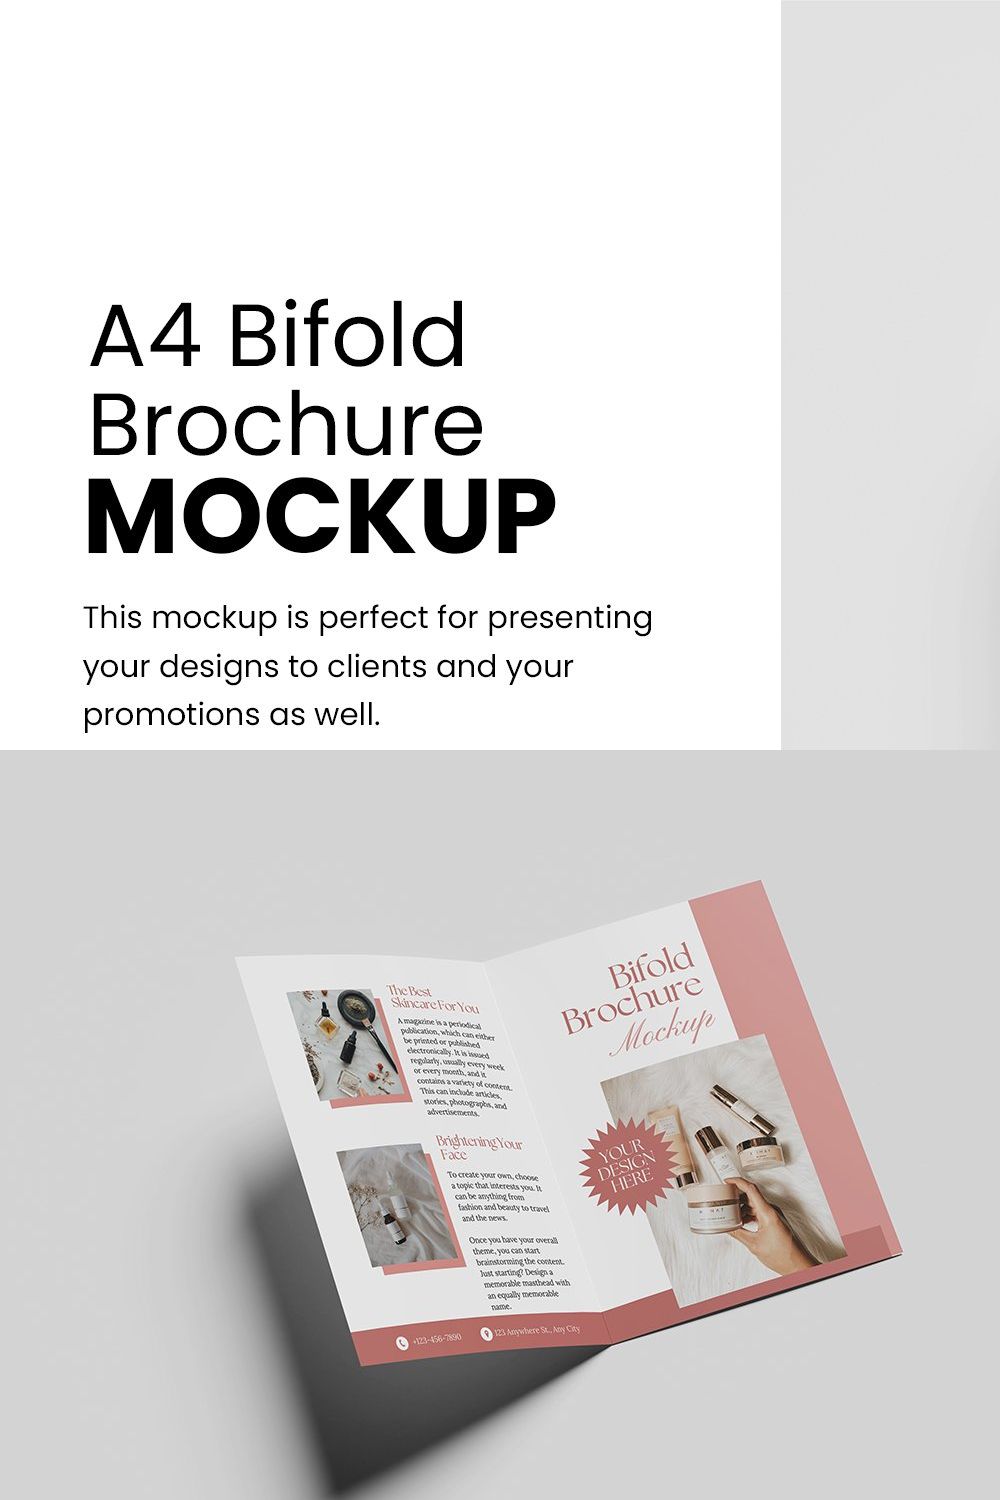 A4 Bifold Brochure Mockup pinterest preview image.